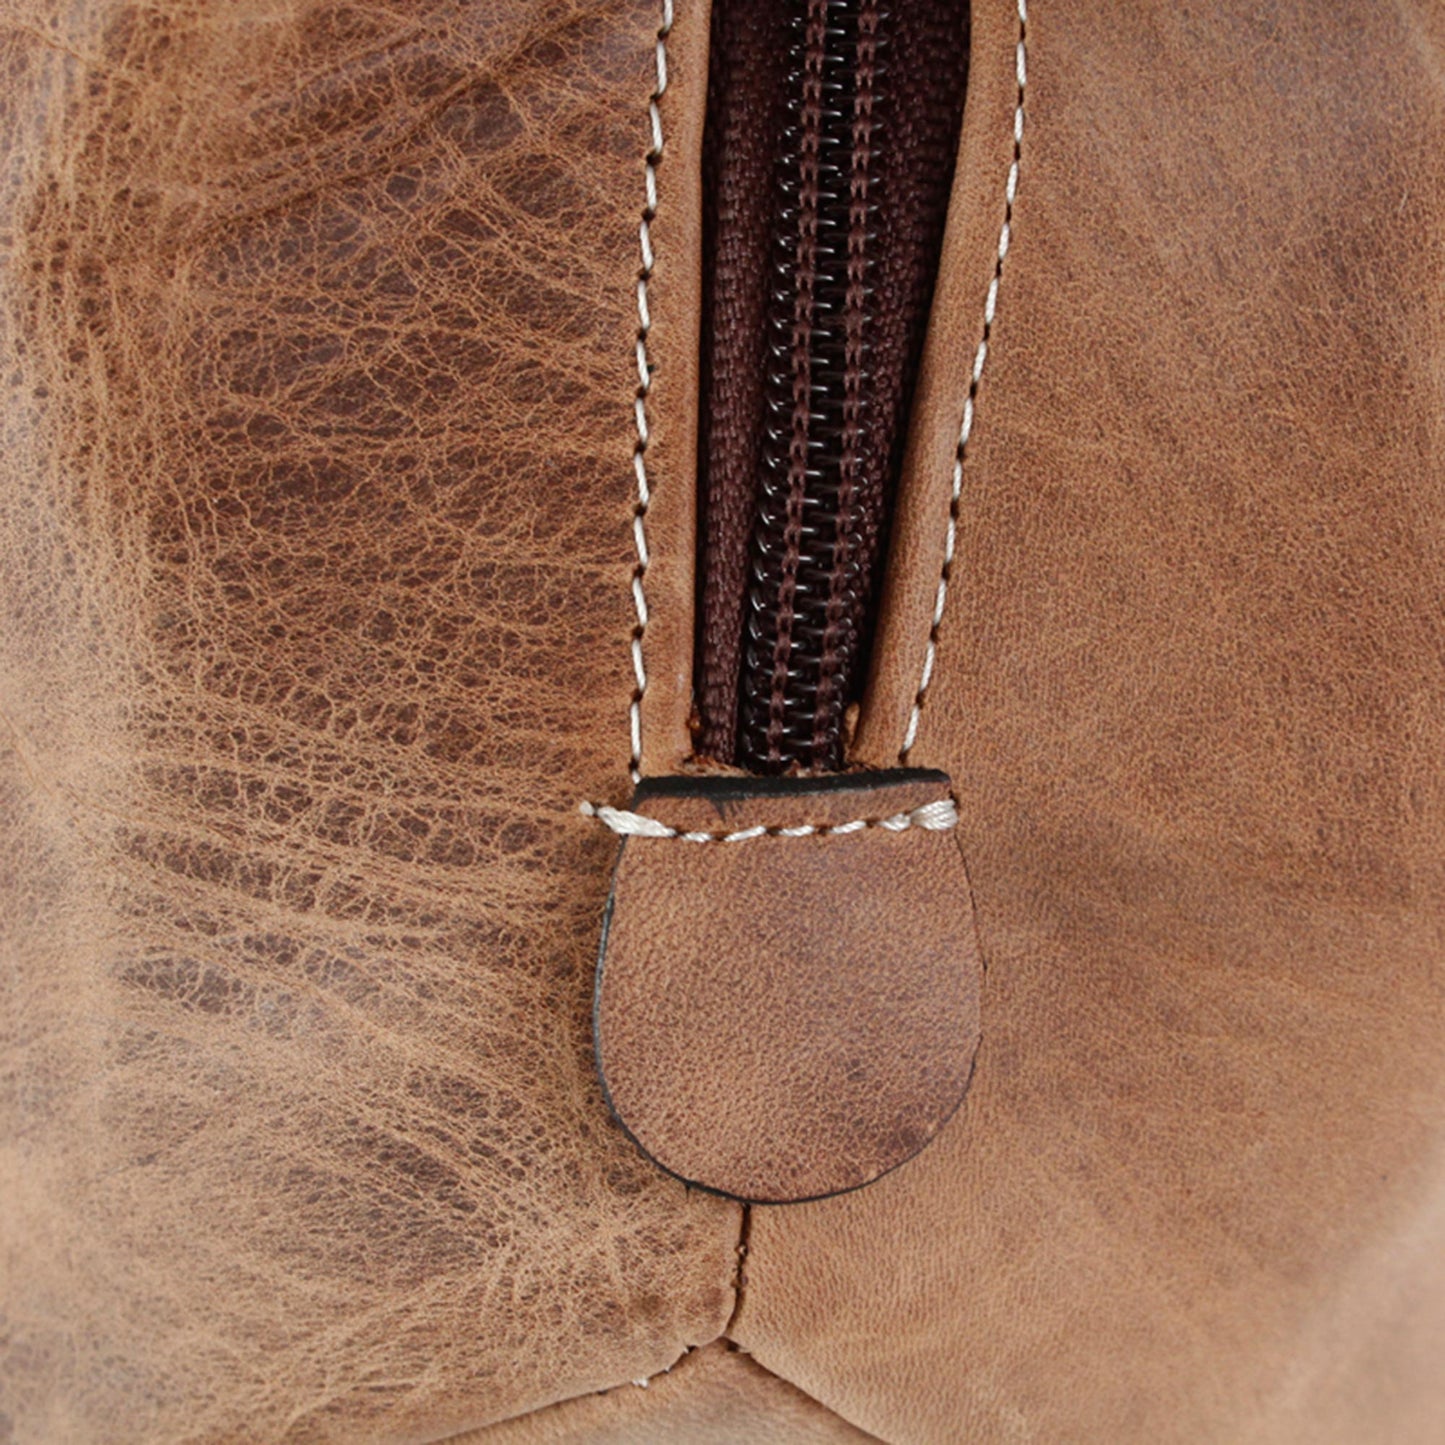 Urban Caramel Brown Leather Hobo Handbag